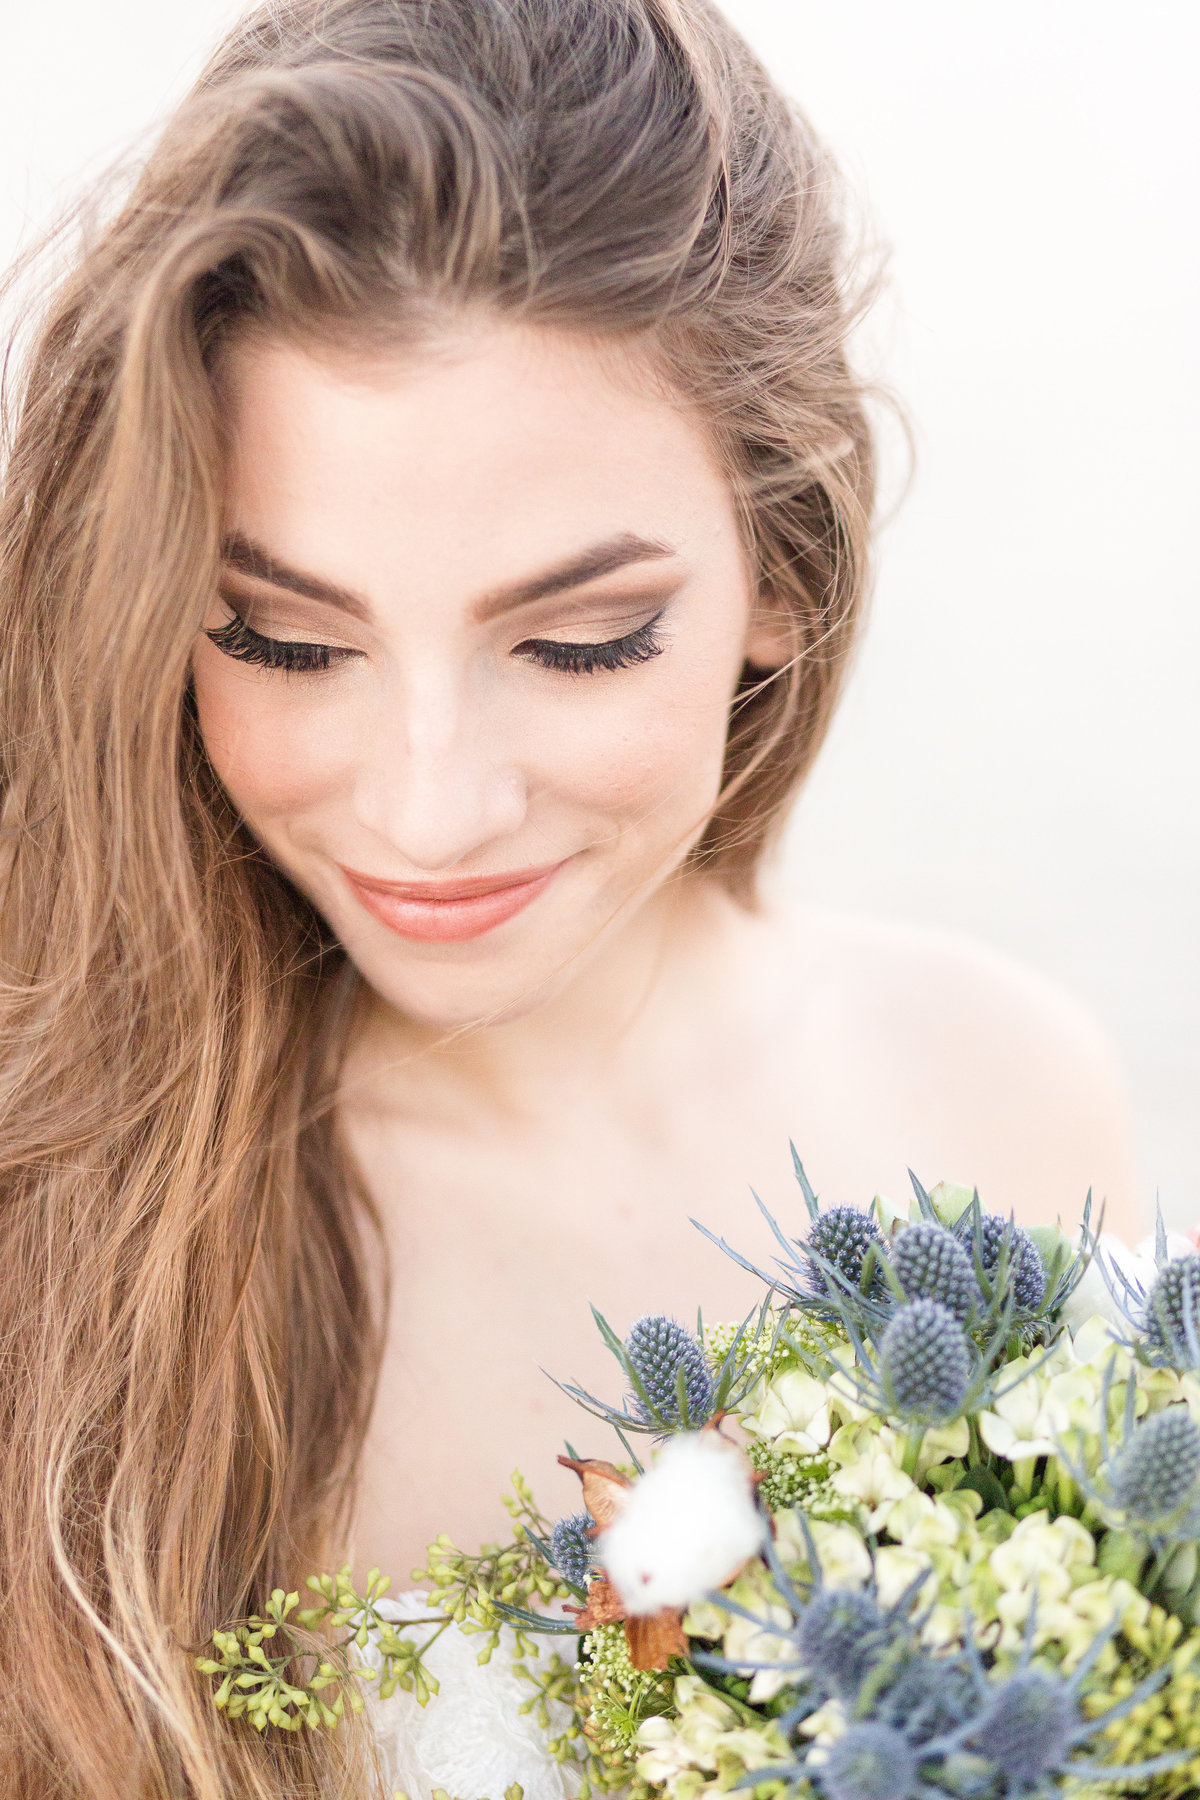 Chris-and-micaela-photography-miami-florida-wedding-bride-florals